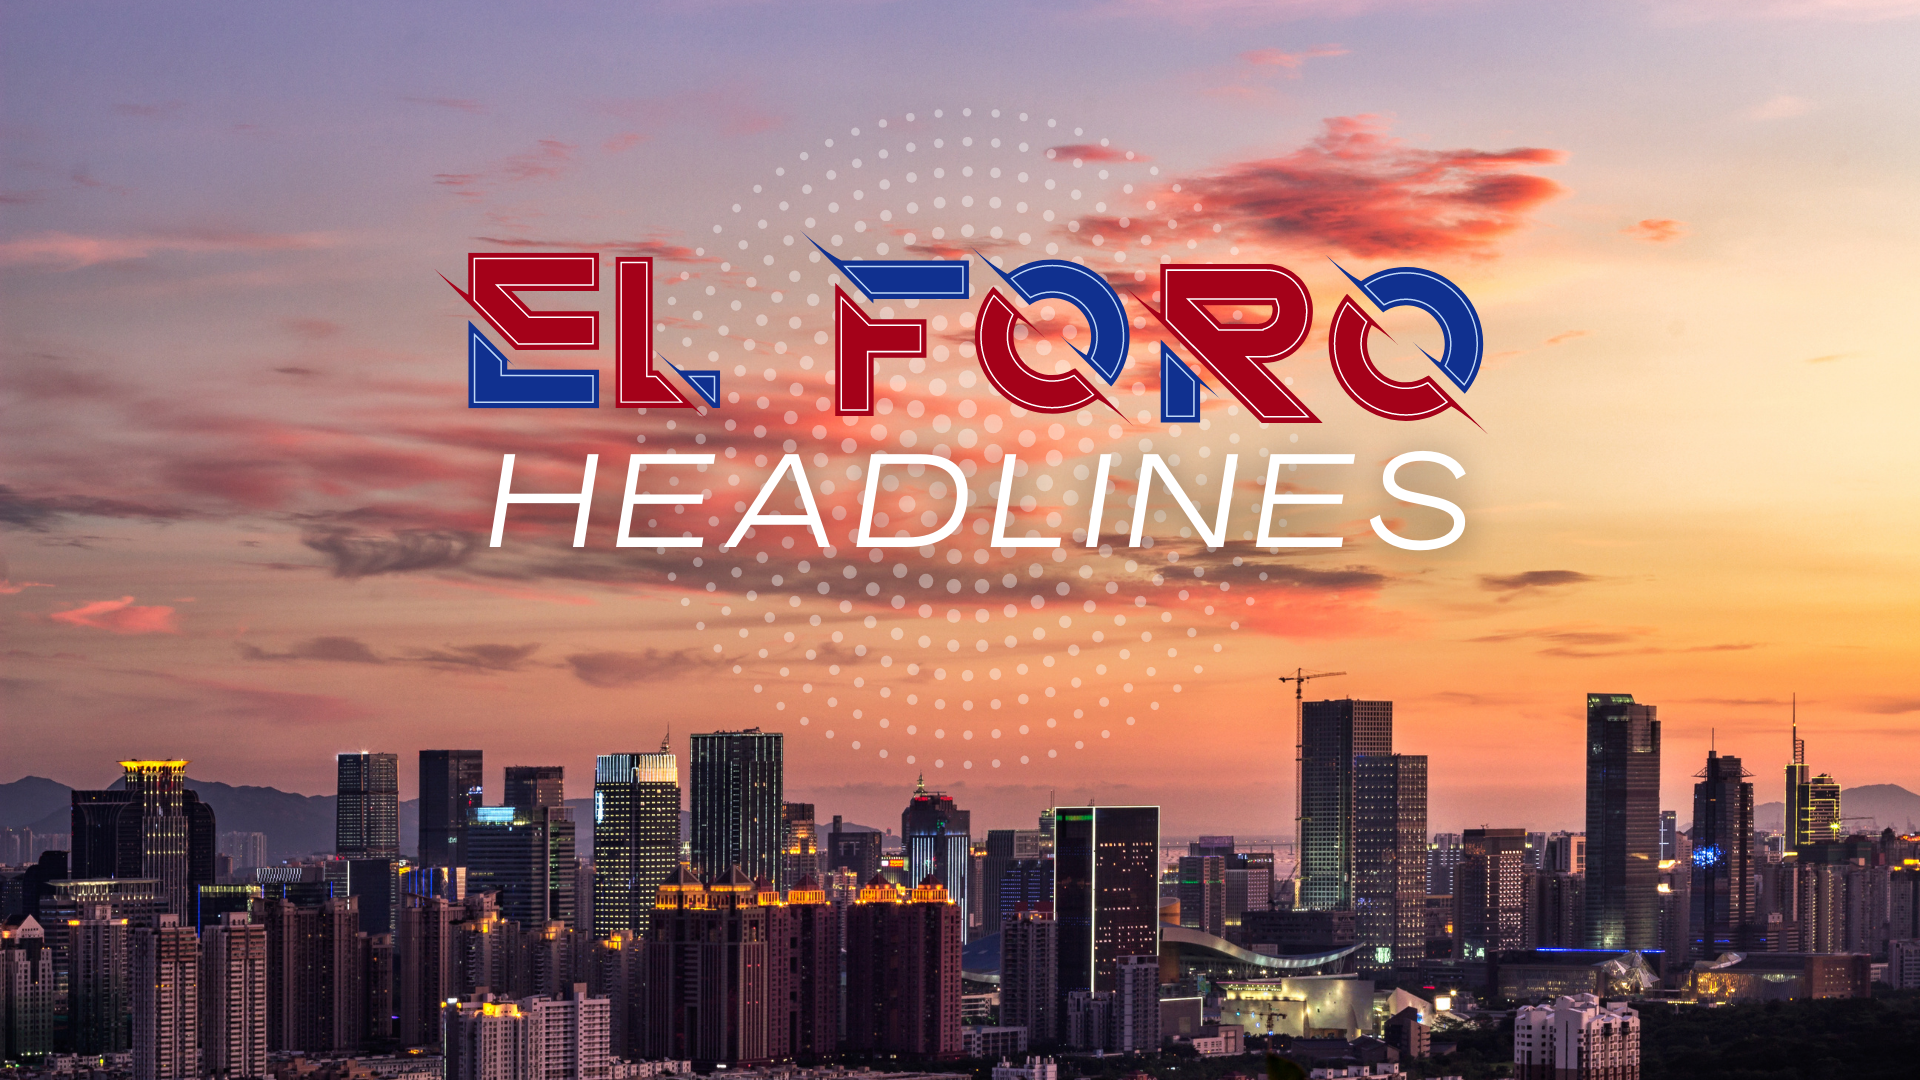 El Foro Headlines